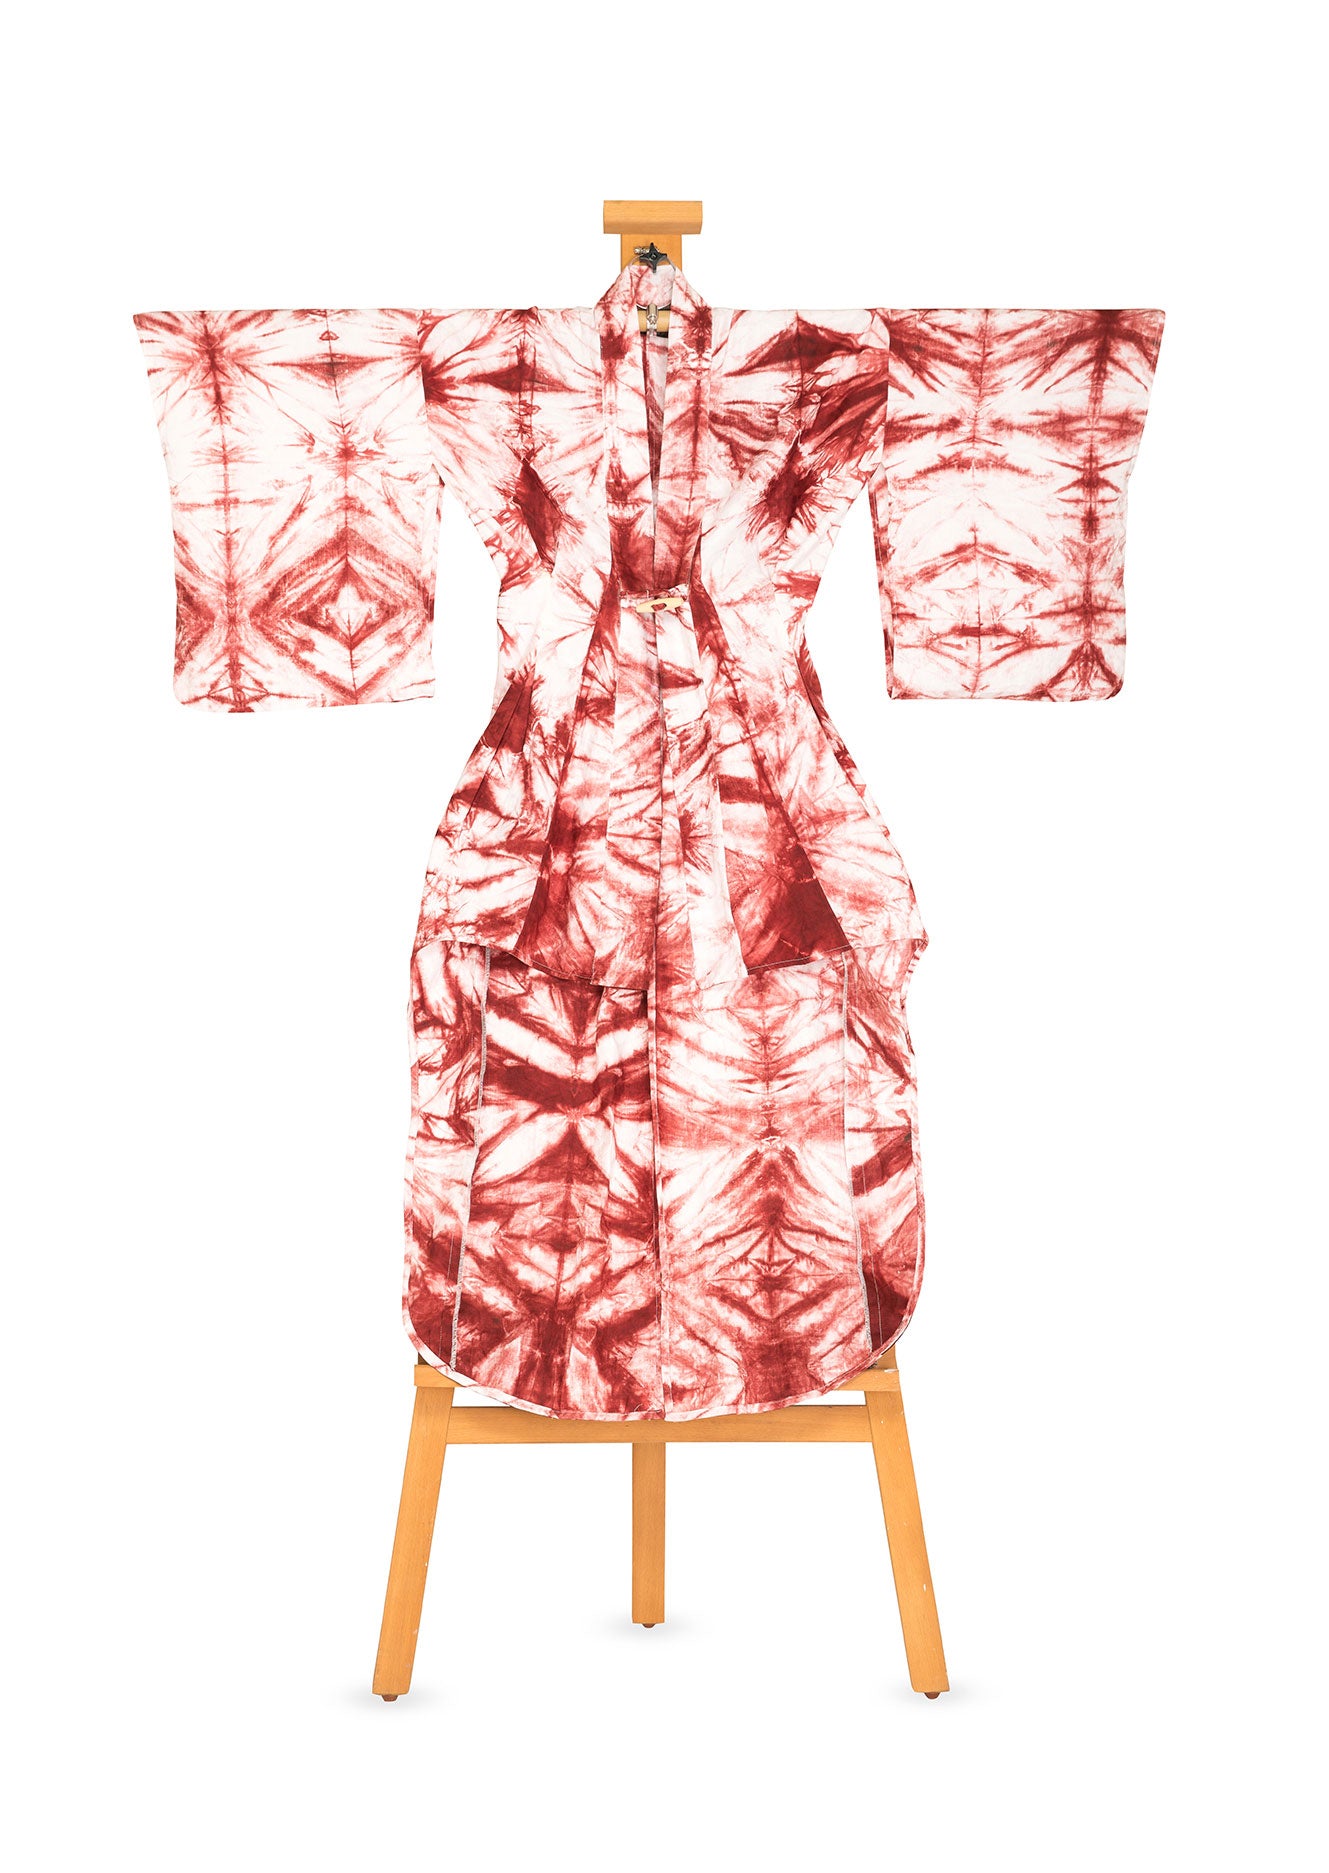 Raw Meat Dragonfly Kimono 342 Exquisitely Joy